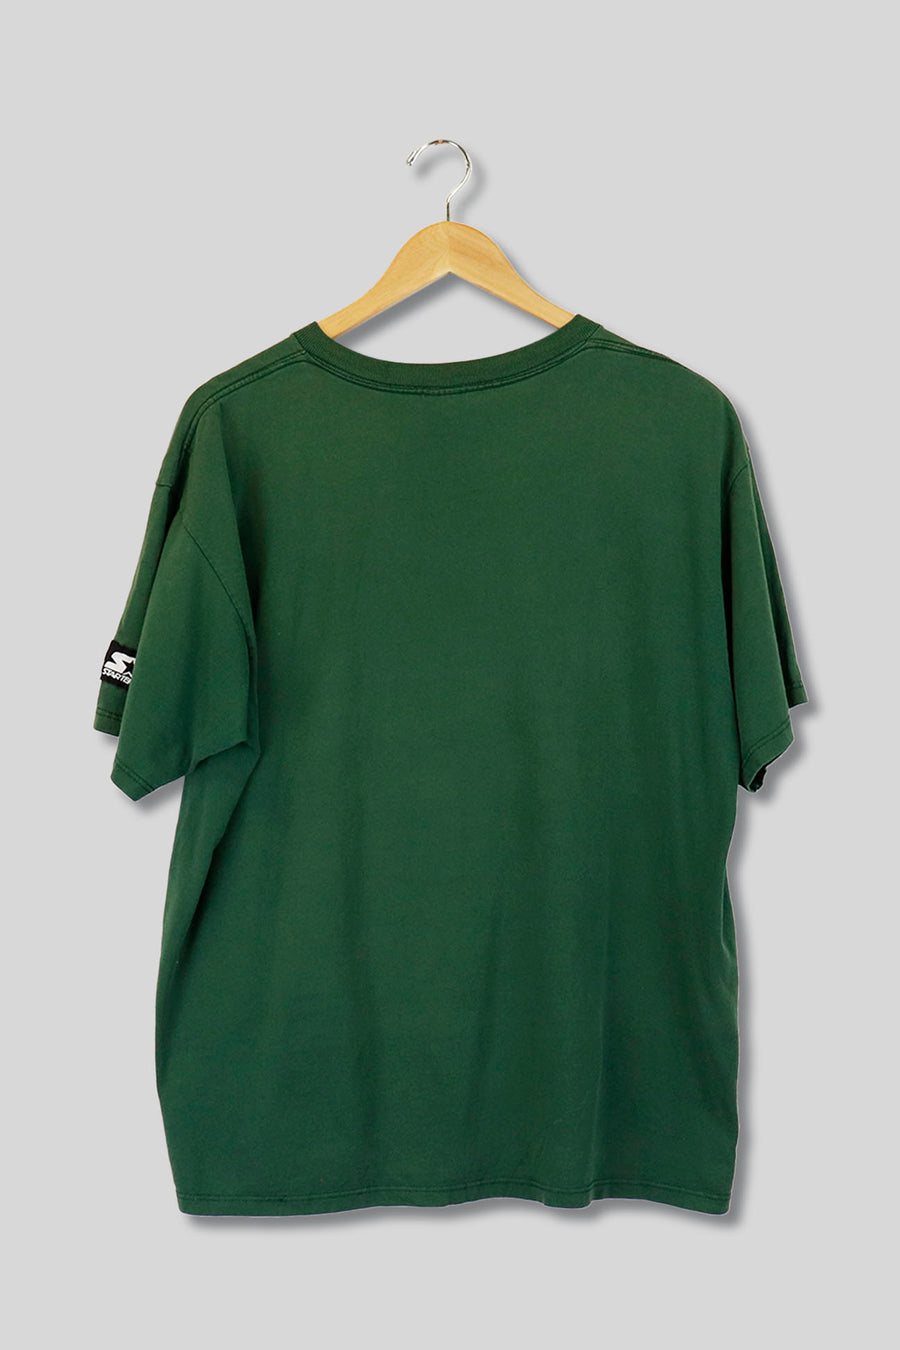 Vintage Starter NFL Green Bay Packers T Shirt Sz L